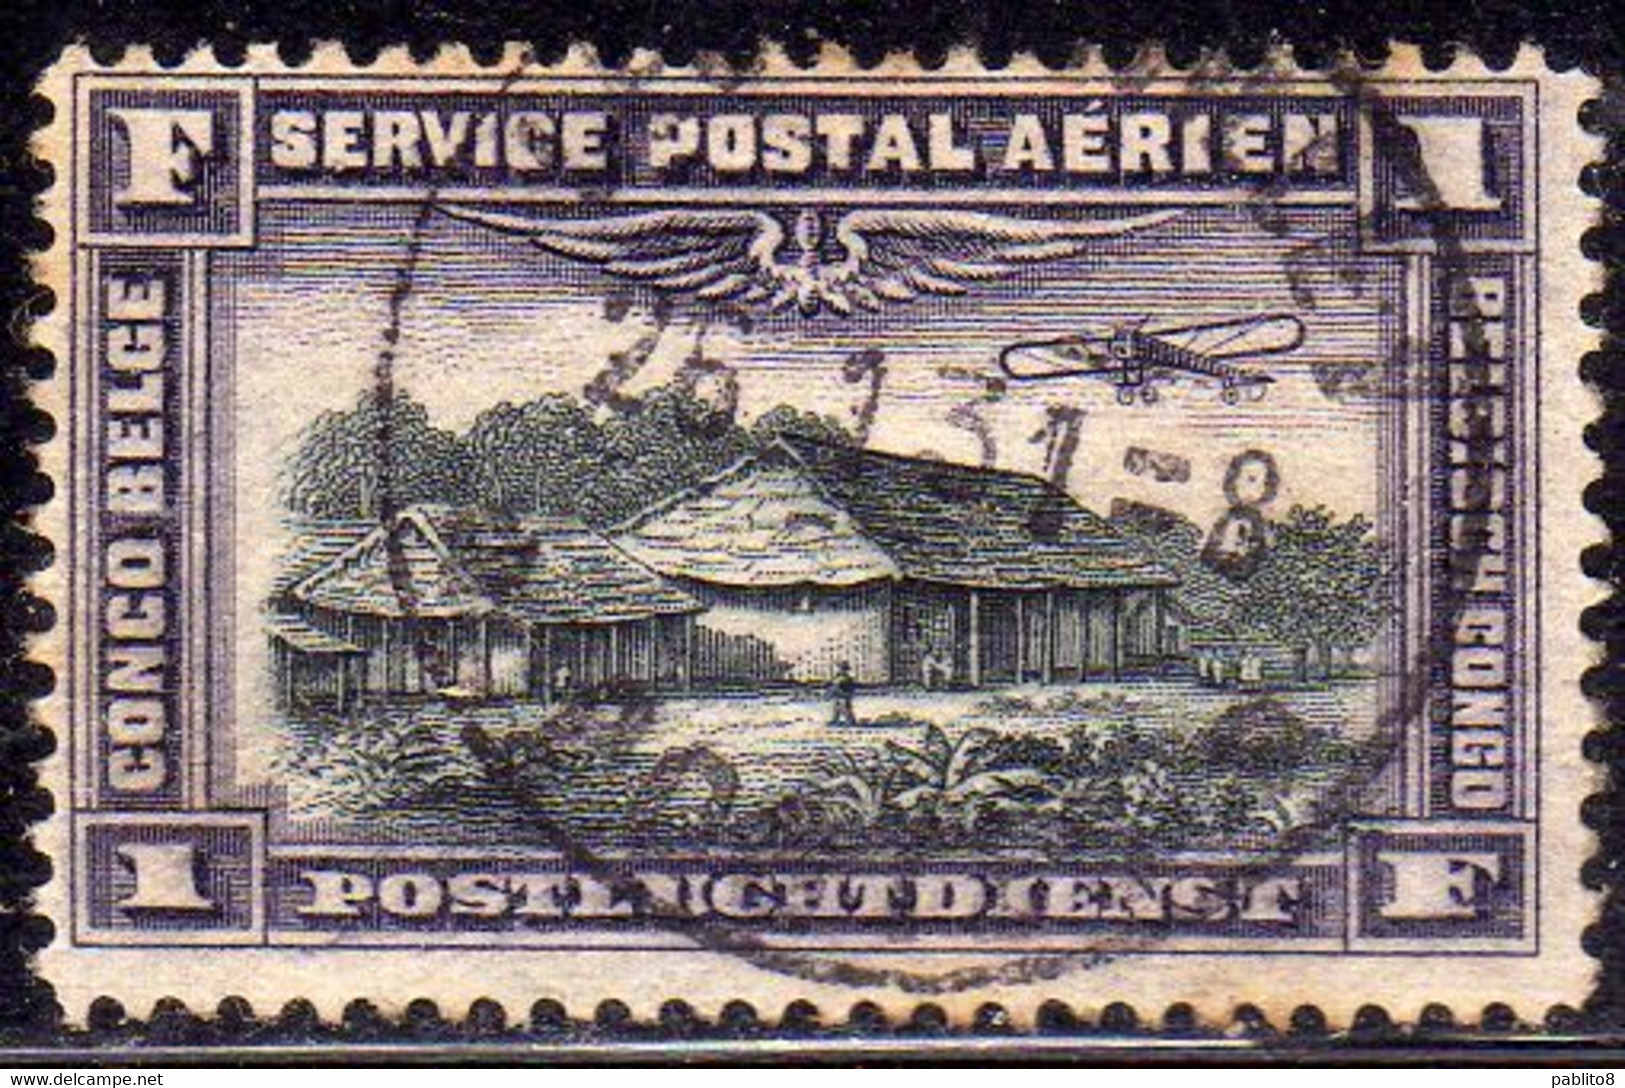 BELGIAN CONGO BELGA BELGE 1920 AIR POST STAMPS SERVICE POSTAL AERIEN COUNTRY STORE 1fr USED OBLITERE' USATO - Oblitérés